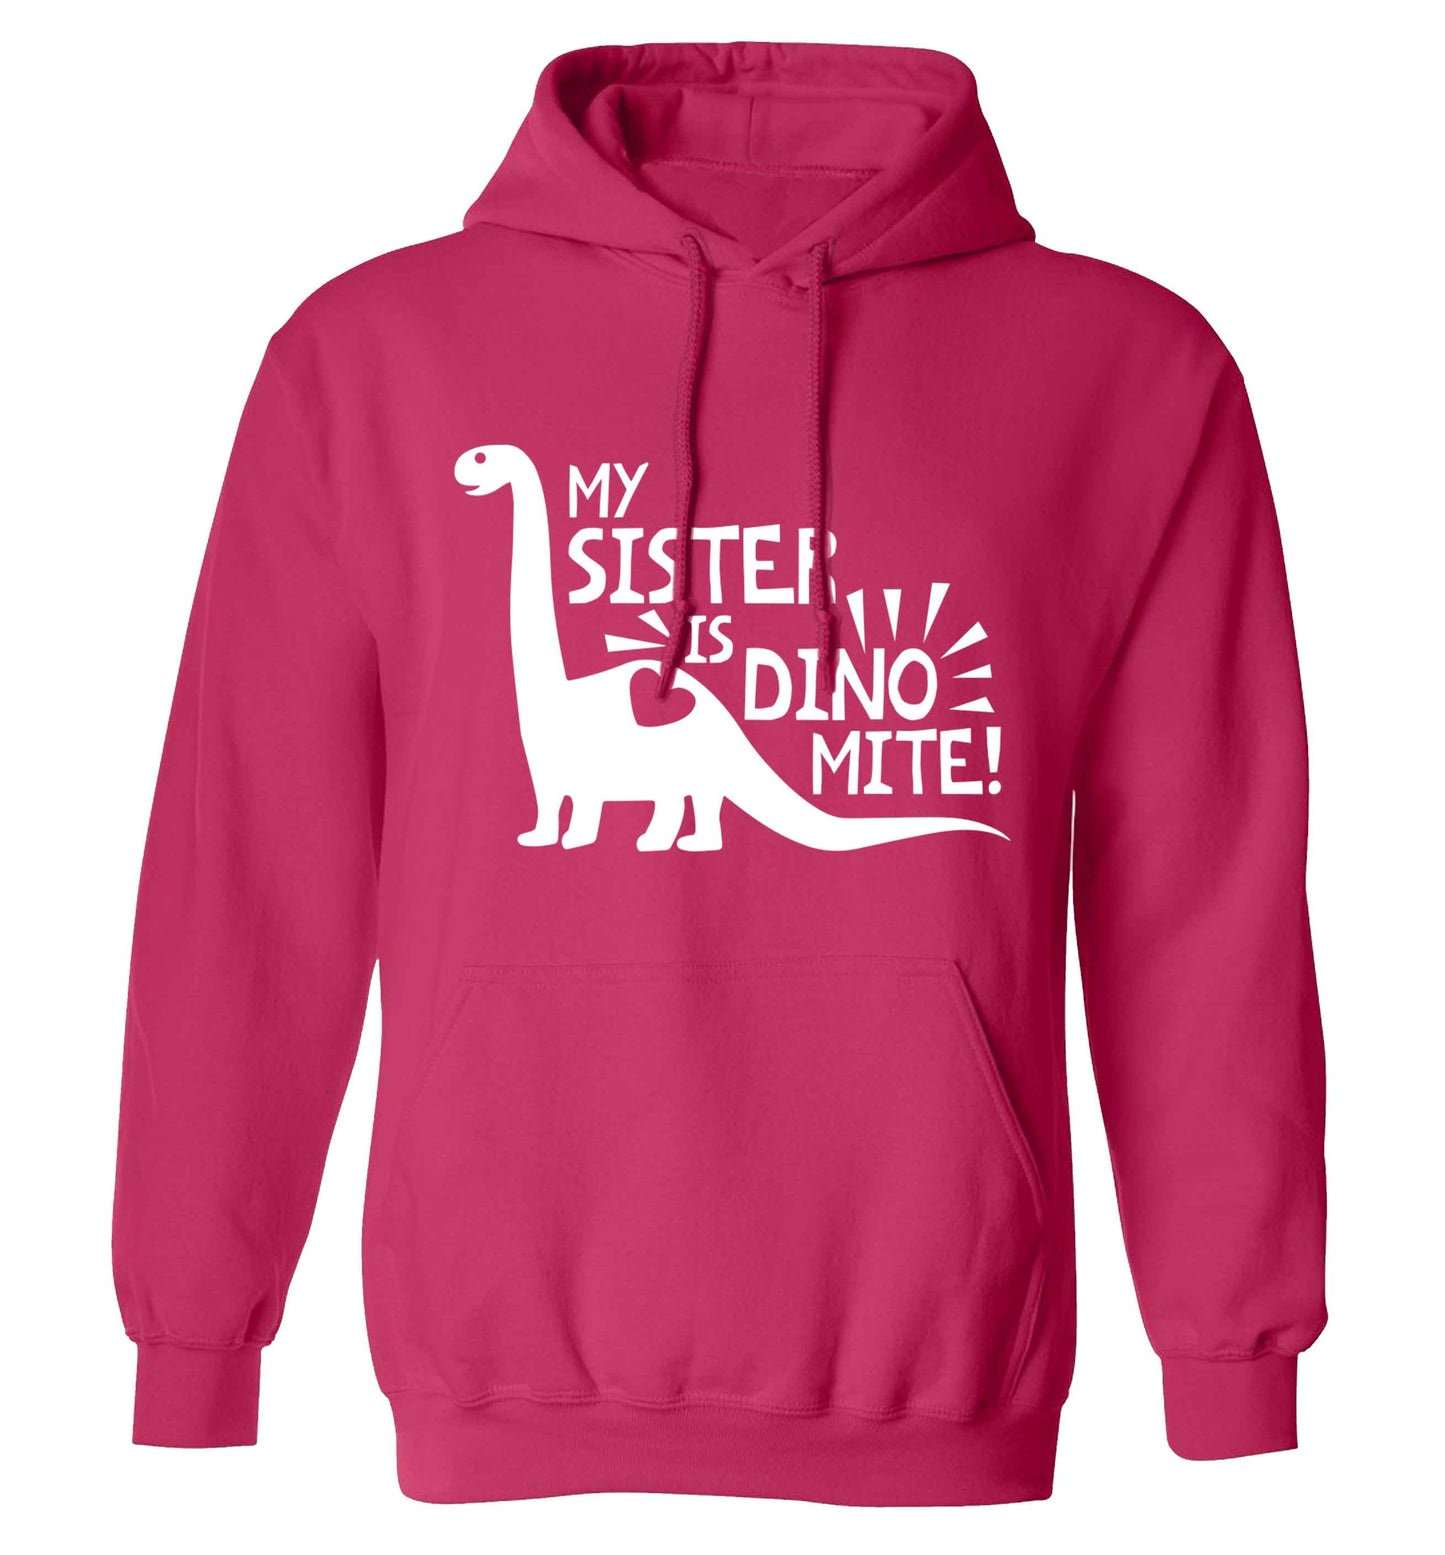 My sister is dinomite! adults unisex pink hoodie 2XL